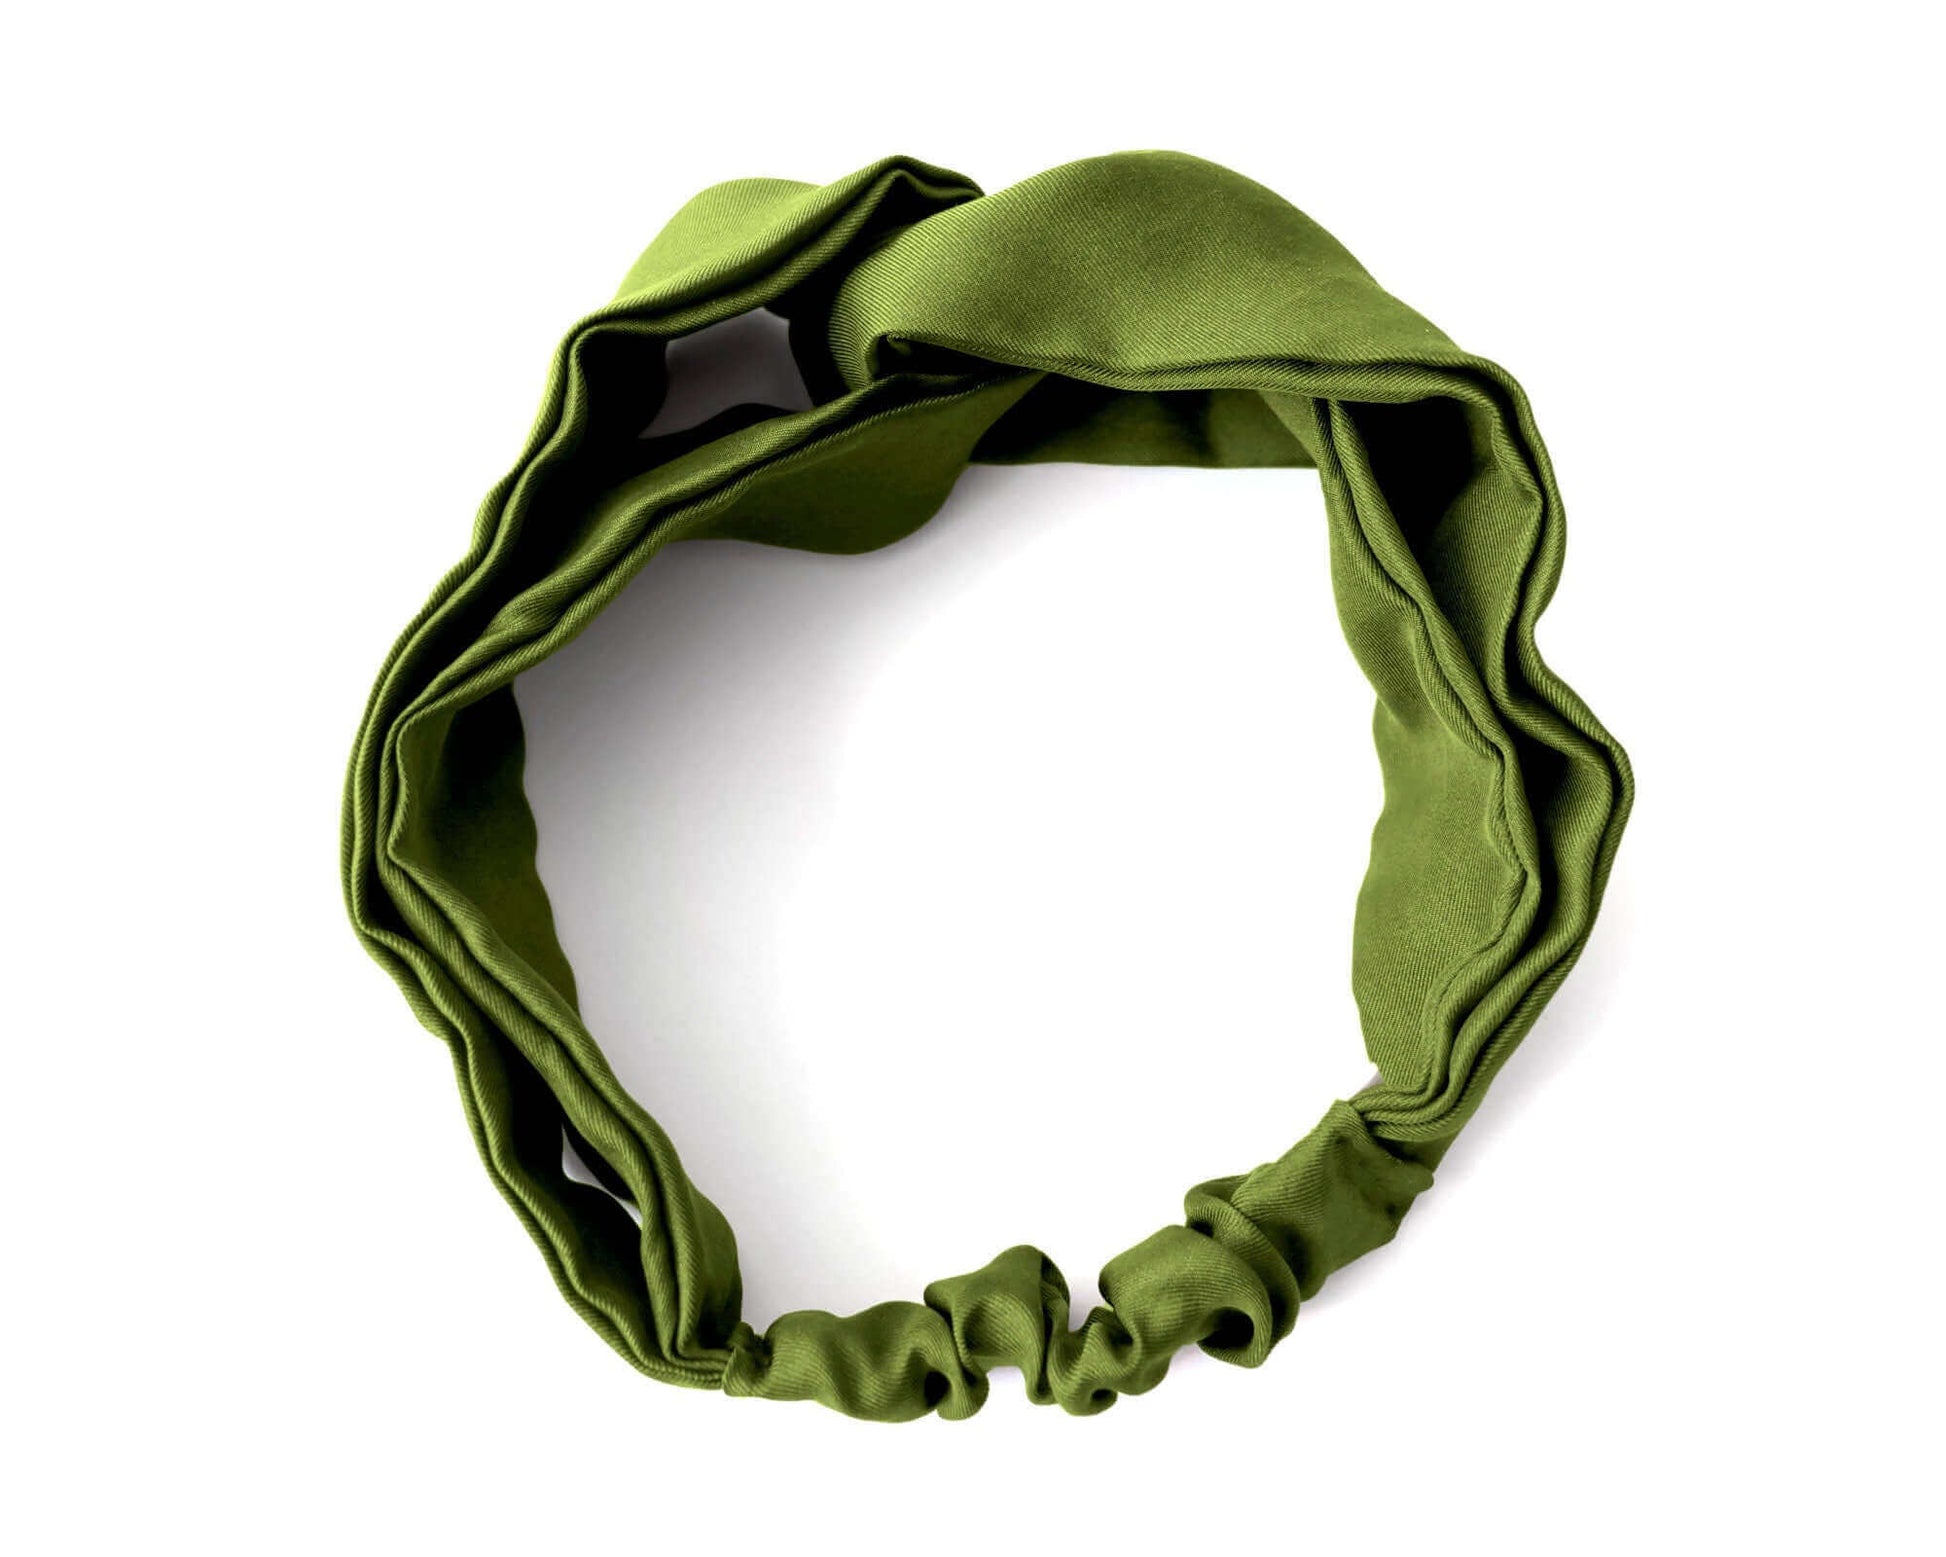 Emerald, Silk Twill, Turban Headband, 100% Silk, Sustainable Luxury, Twist Headband, Eco-Friendly Fabric